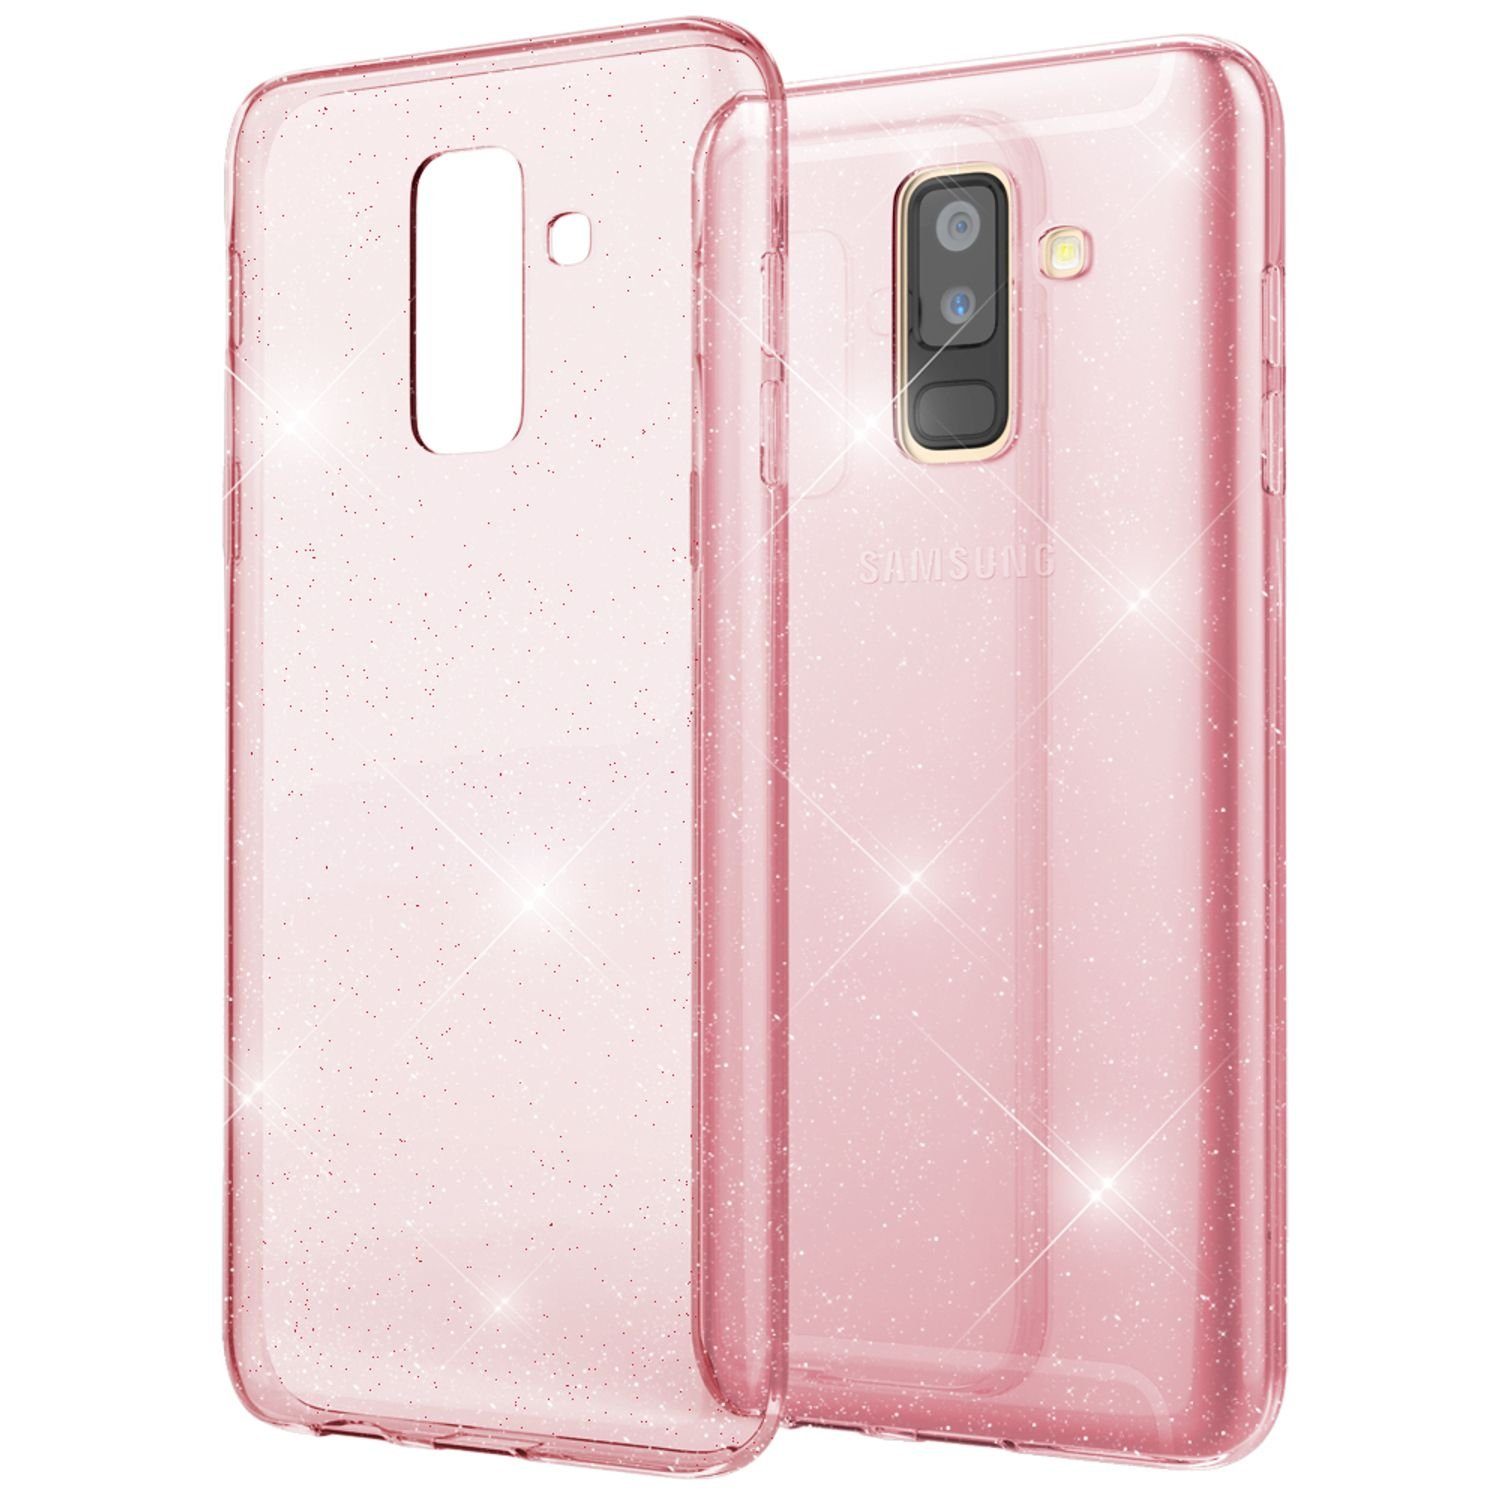 Nalia Smartphone-Hülle Samsung Galaxy A6 Plus, Klare Glitzer Hülle / Silikon Transparent / Glitter Cover / Bling Case